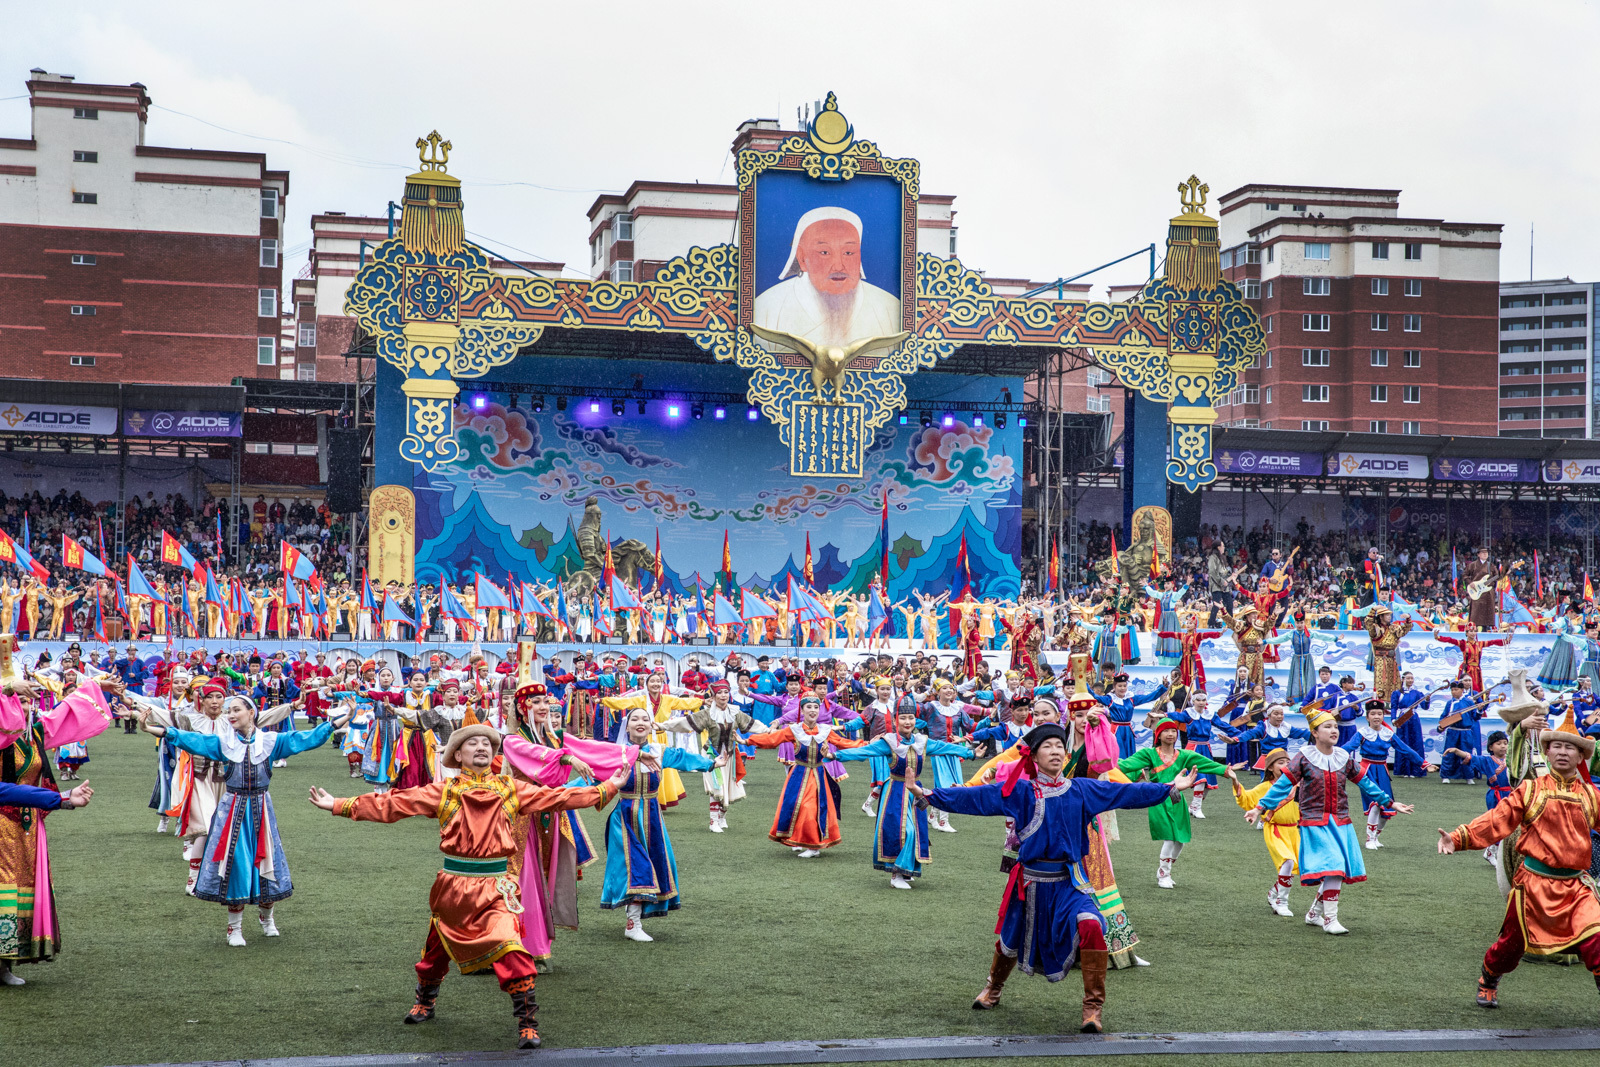 Dancers in national Mongolian dress